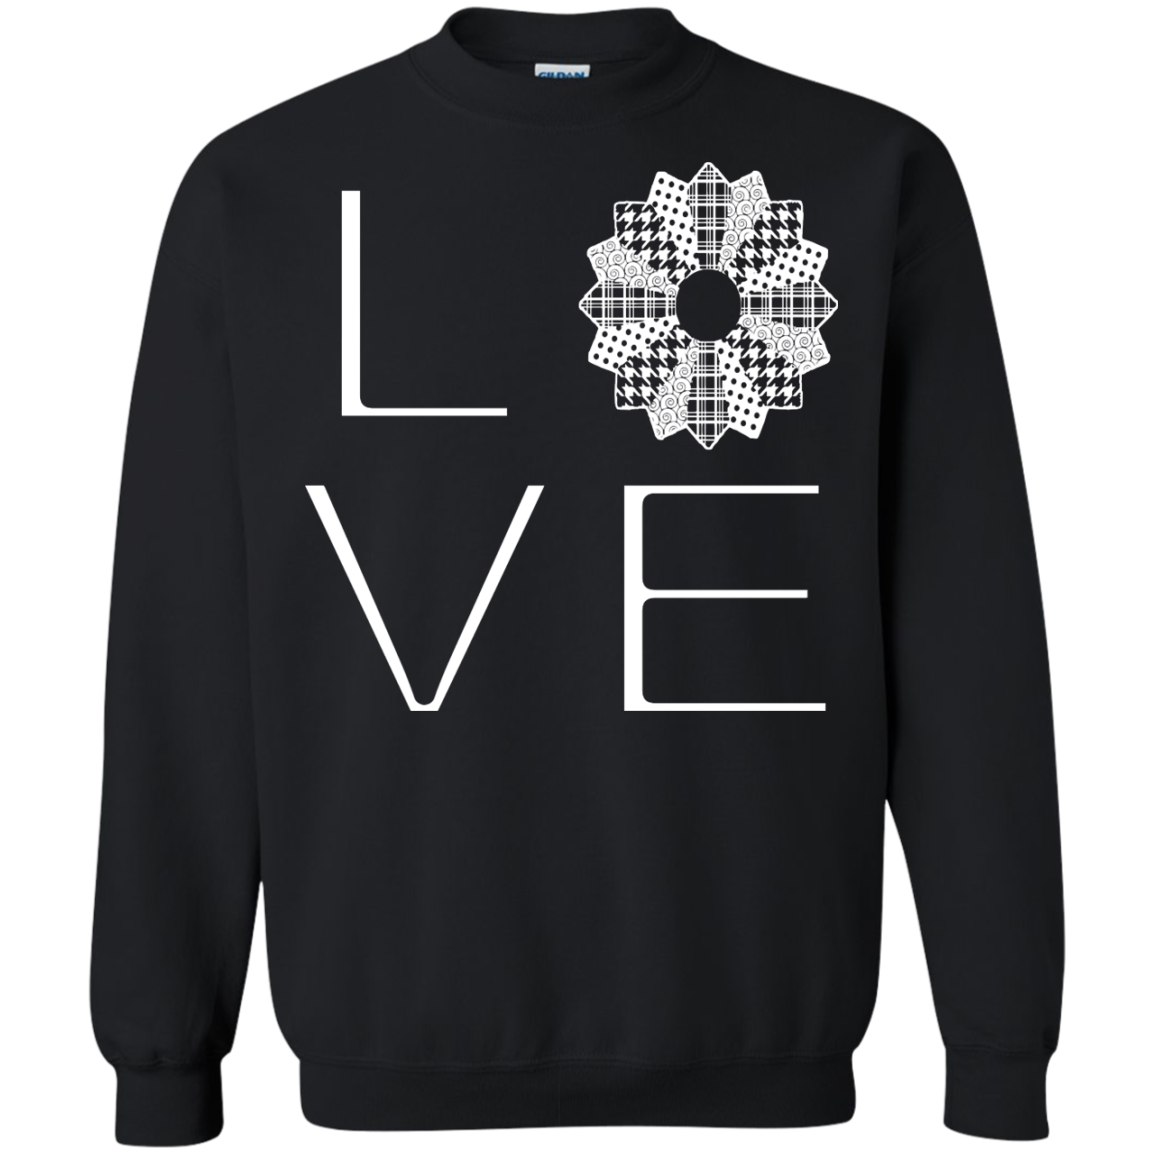 LOVE Quilting Crewneck Sweatshirts - Crafter4Life - 2